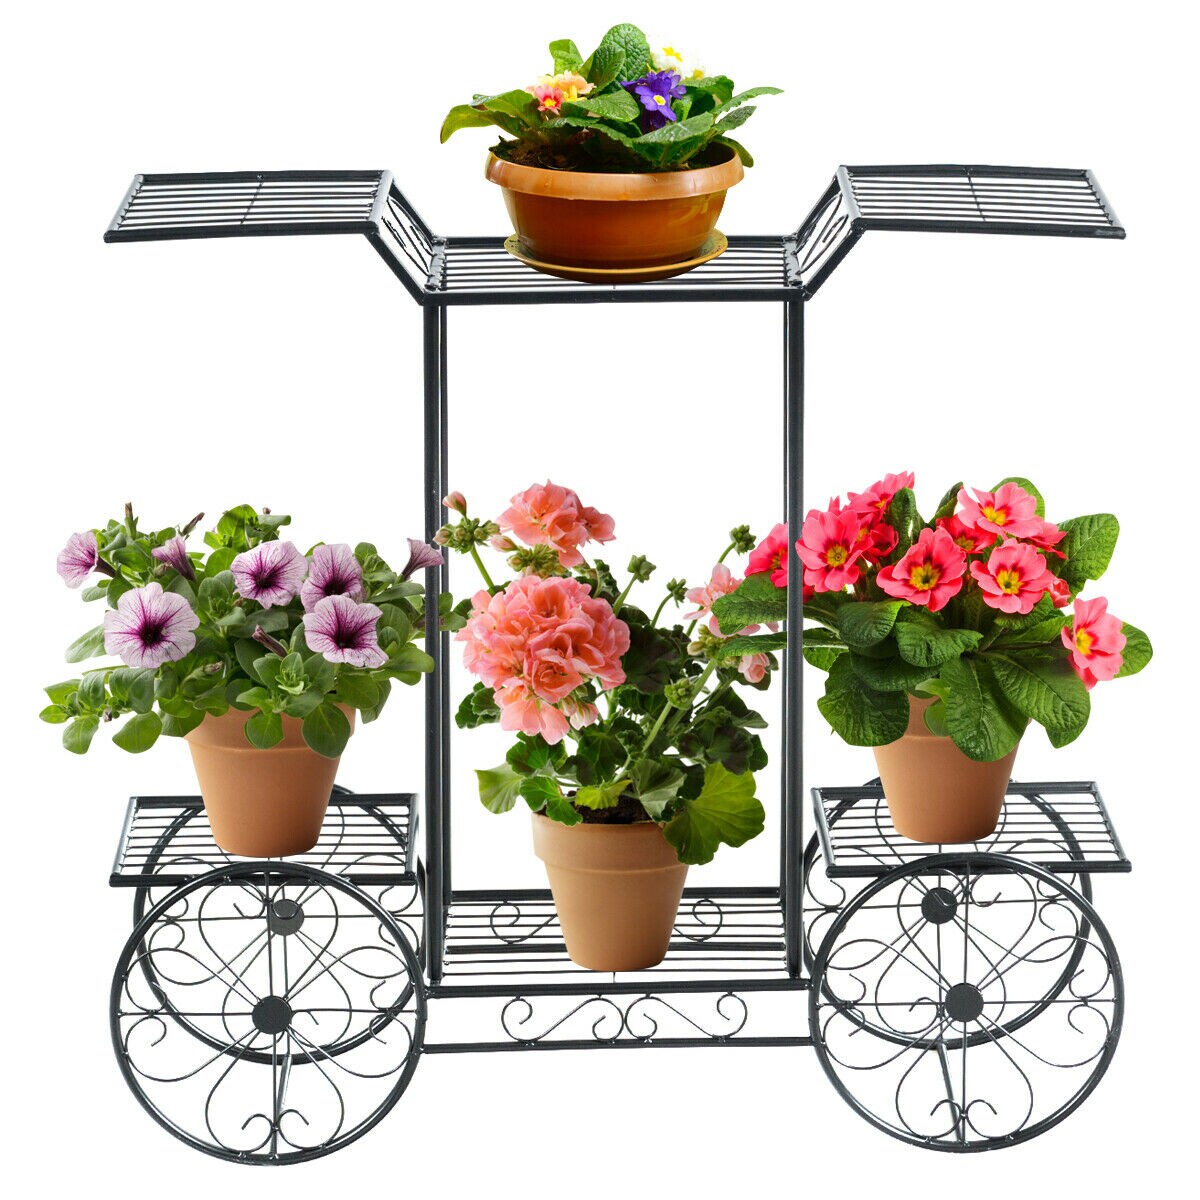 Gymax 6-Tier Garden Cart Stand Flower Rack Display Decor Flower Pot Plant Holder